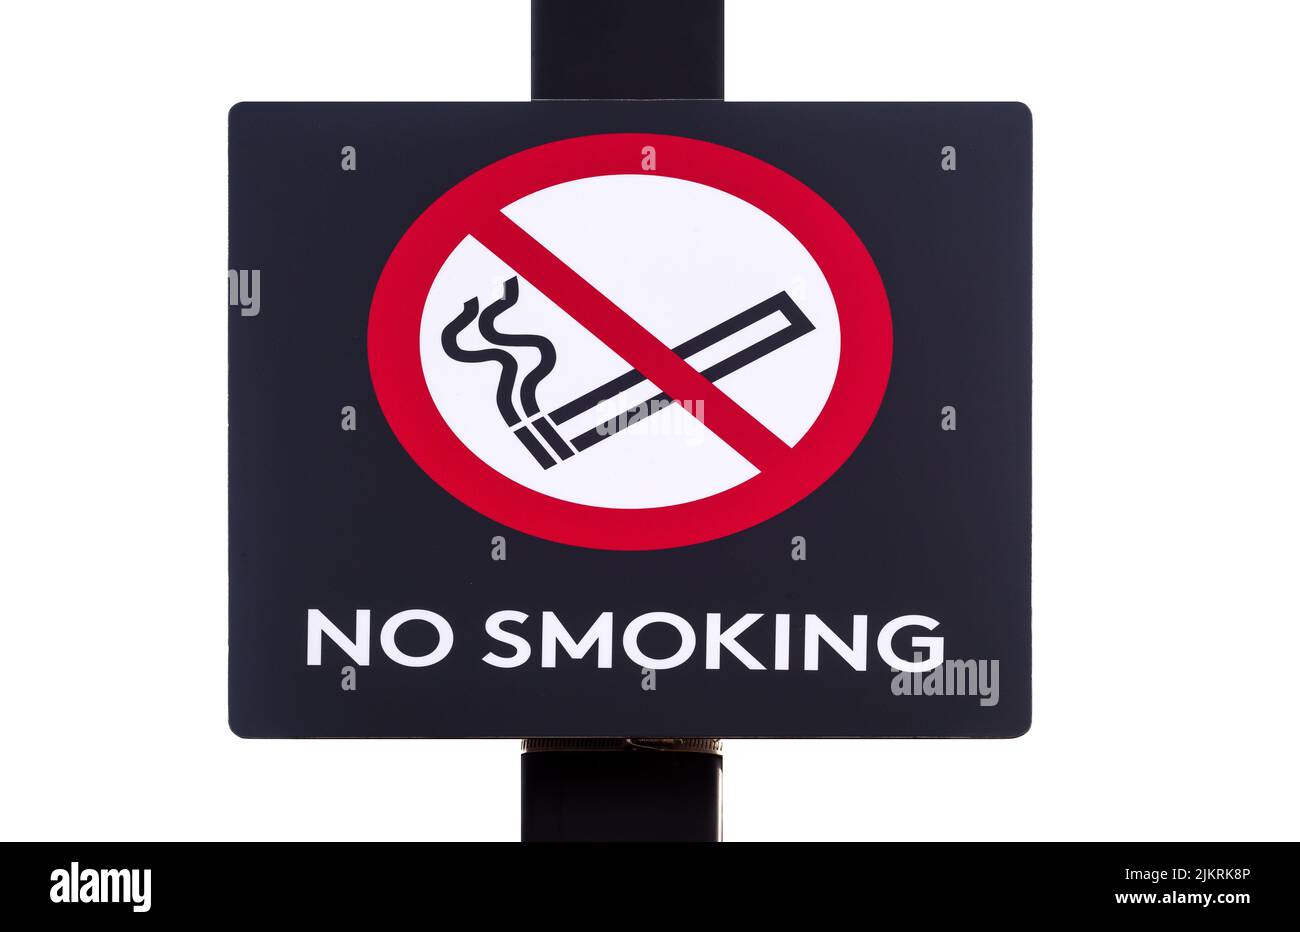 No smoking sign isolated on white background. Stock Photo